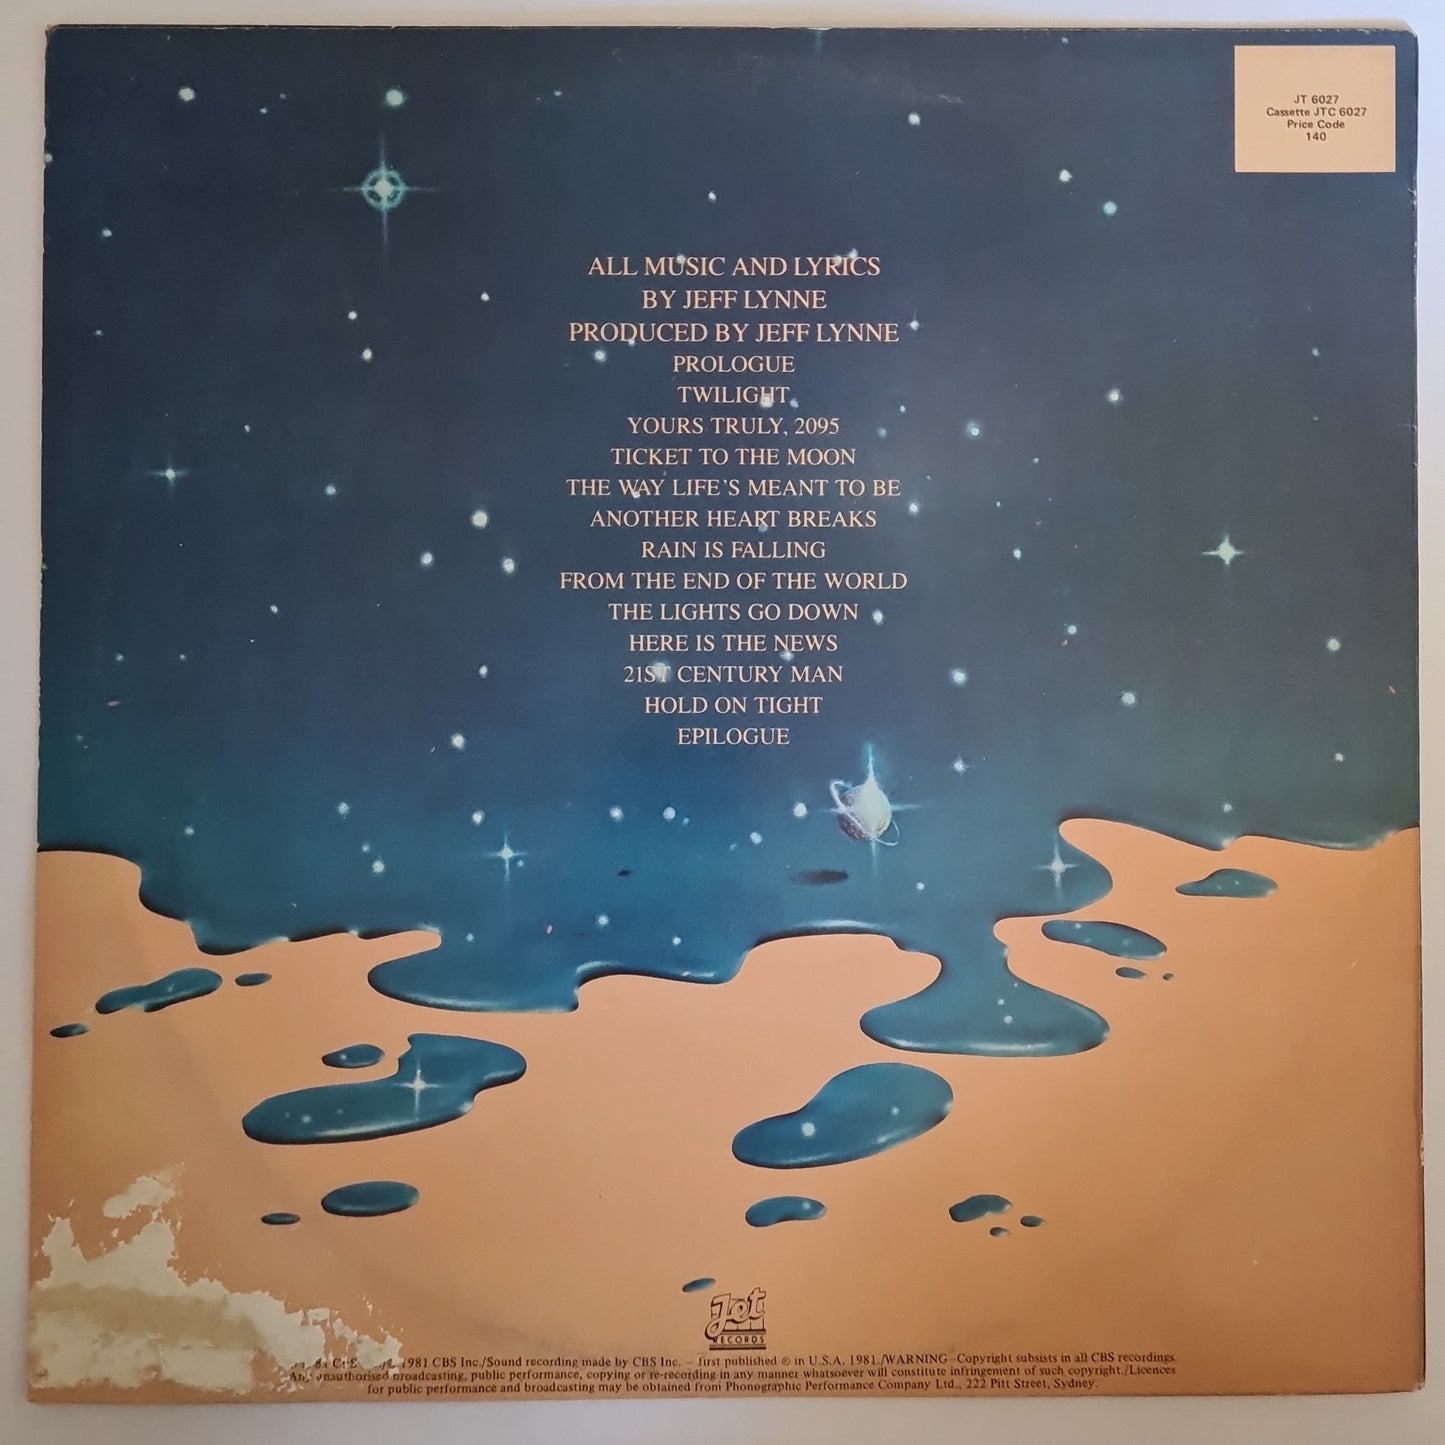 ELO – Time - 1981 - Vinyl Record